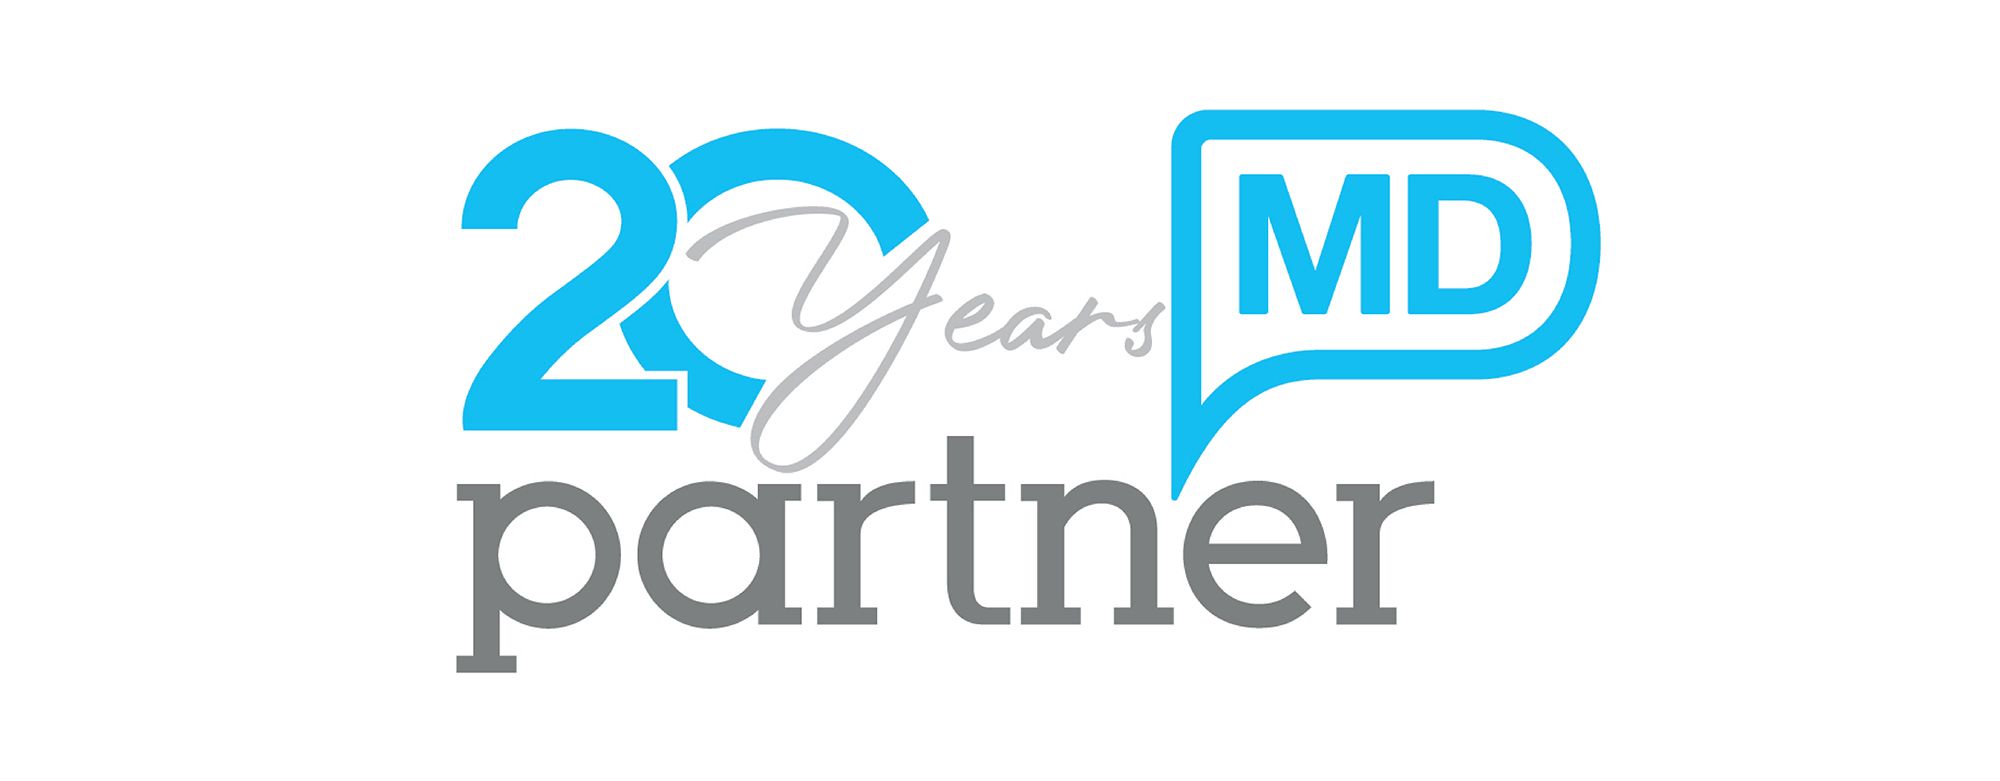 PartnerMD Celebrates 20th Anniversary